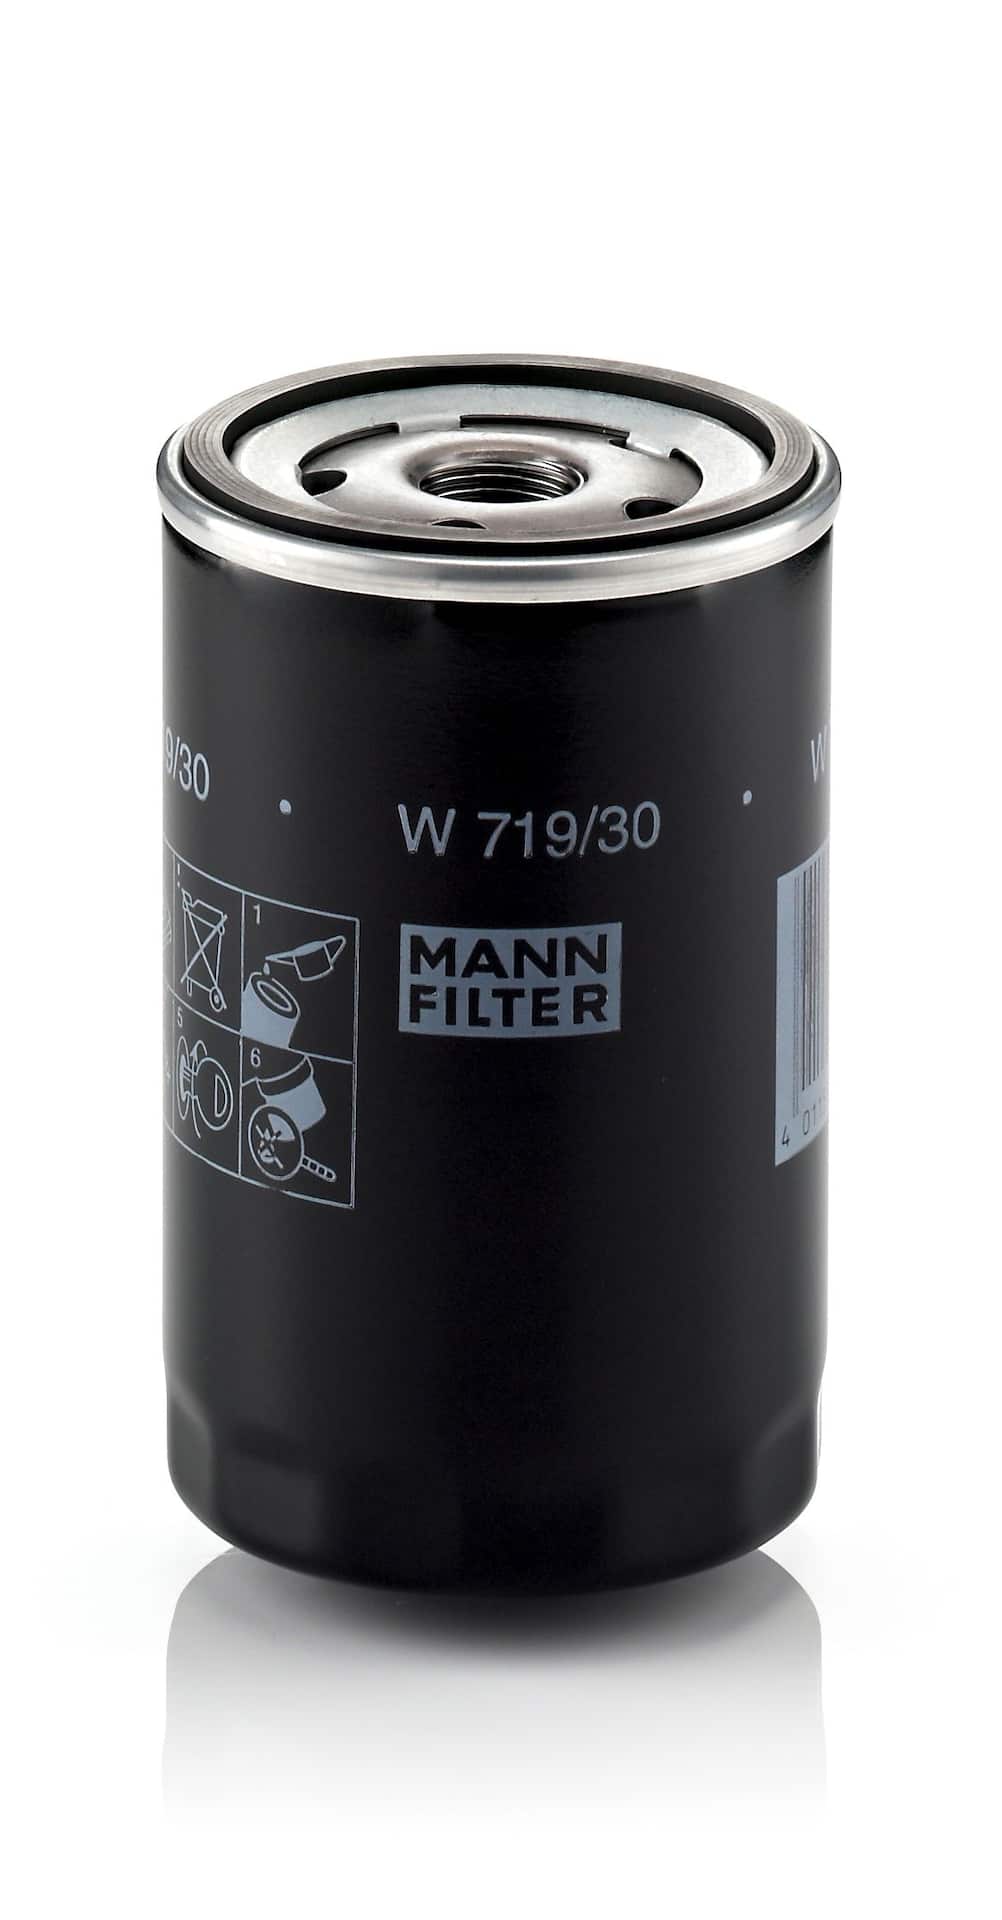 MANN-FILTER W 719/30 Spin-On Oil Filter